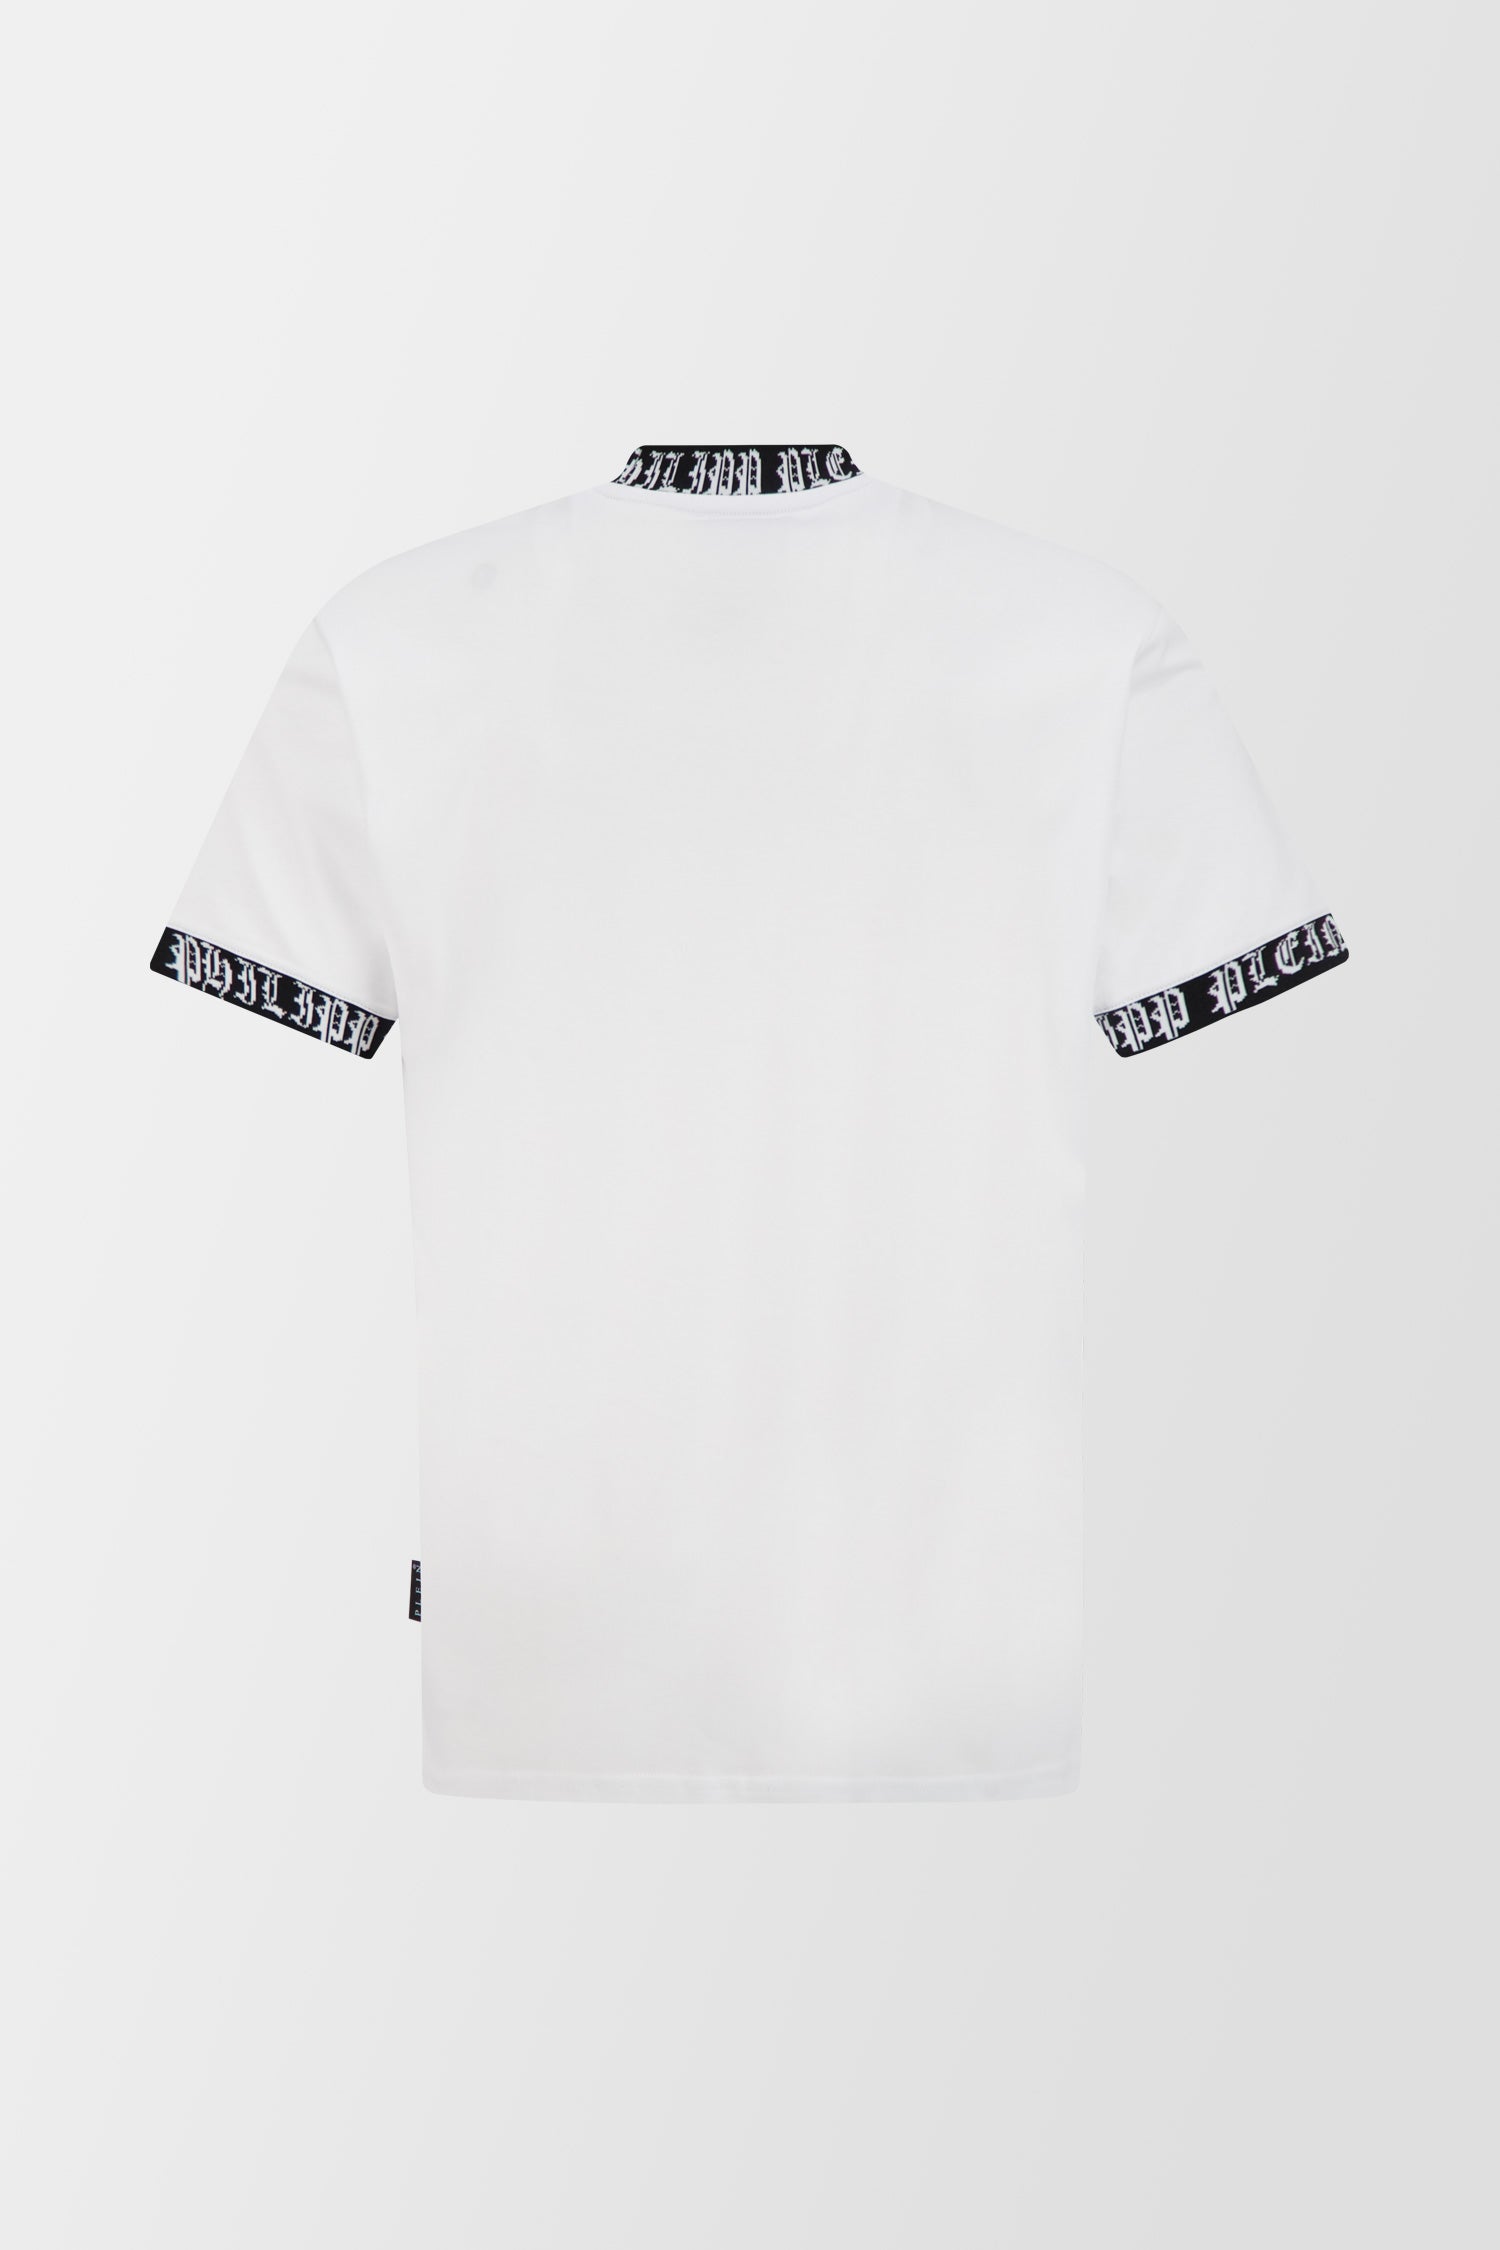 Philipp Plein White Round Neck T-Shirt